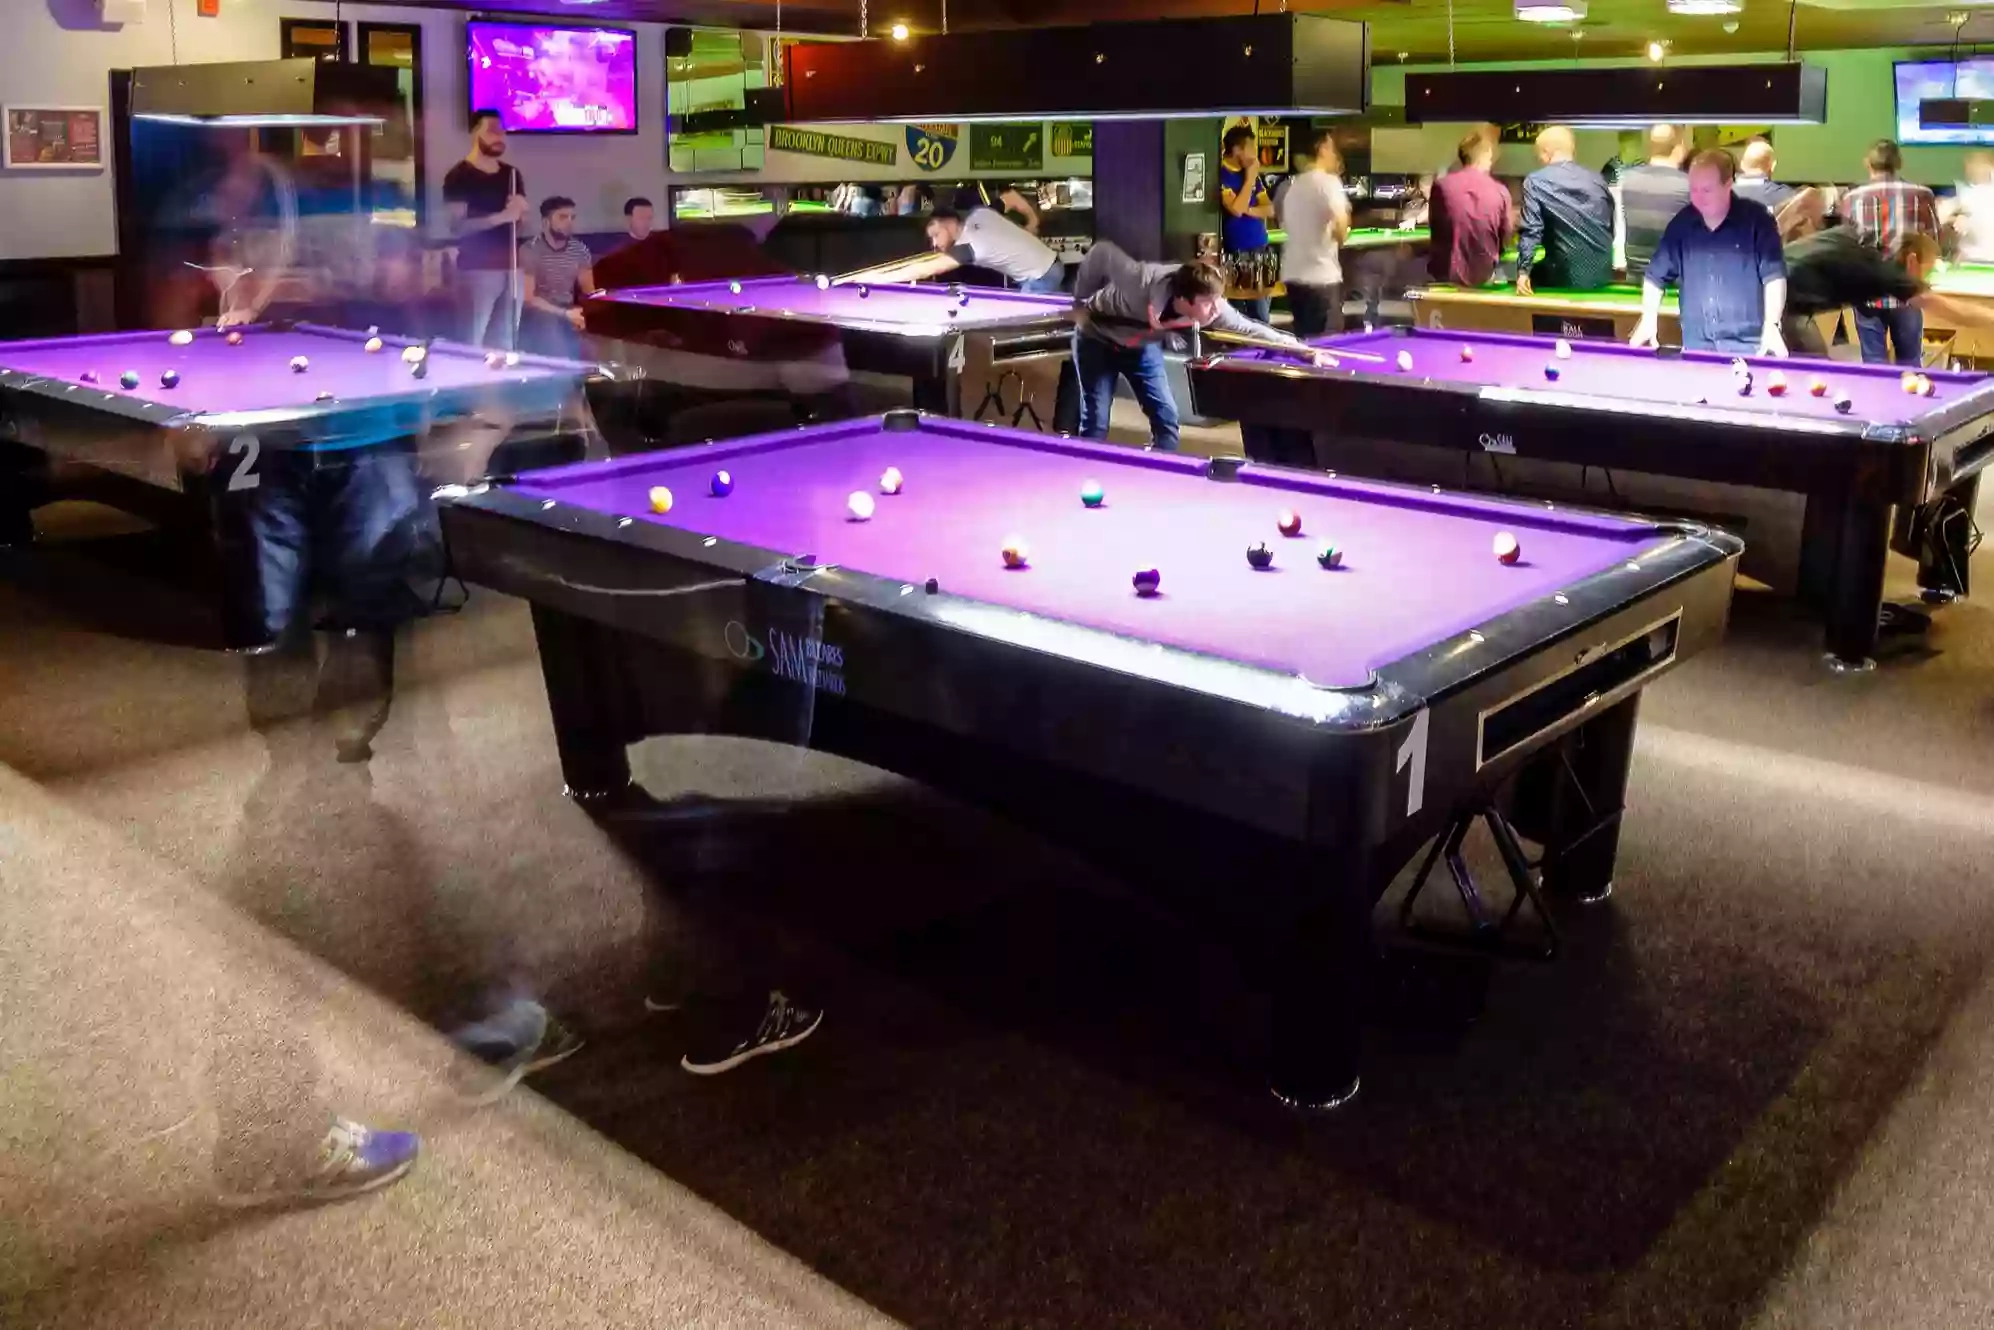 The Ball Room Sports Bar (Dunfermline) - Pool, Snooker & Darts Hall